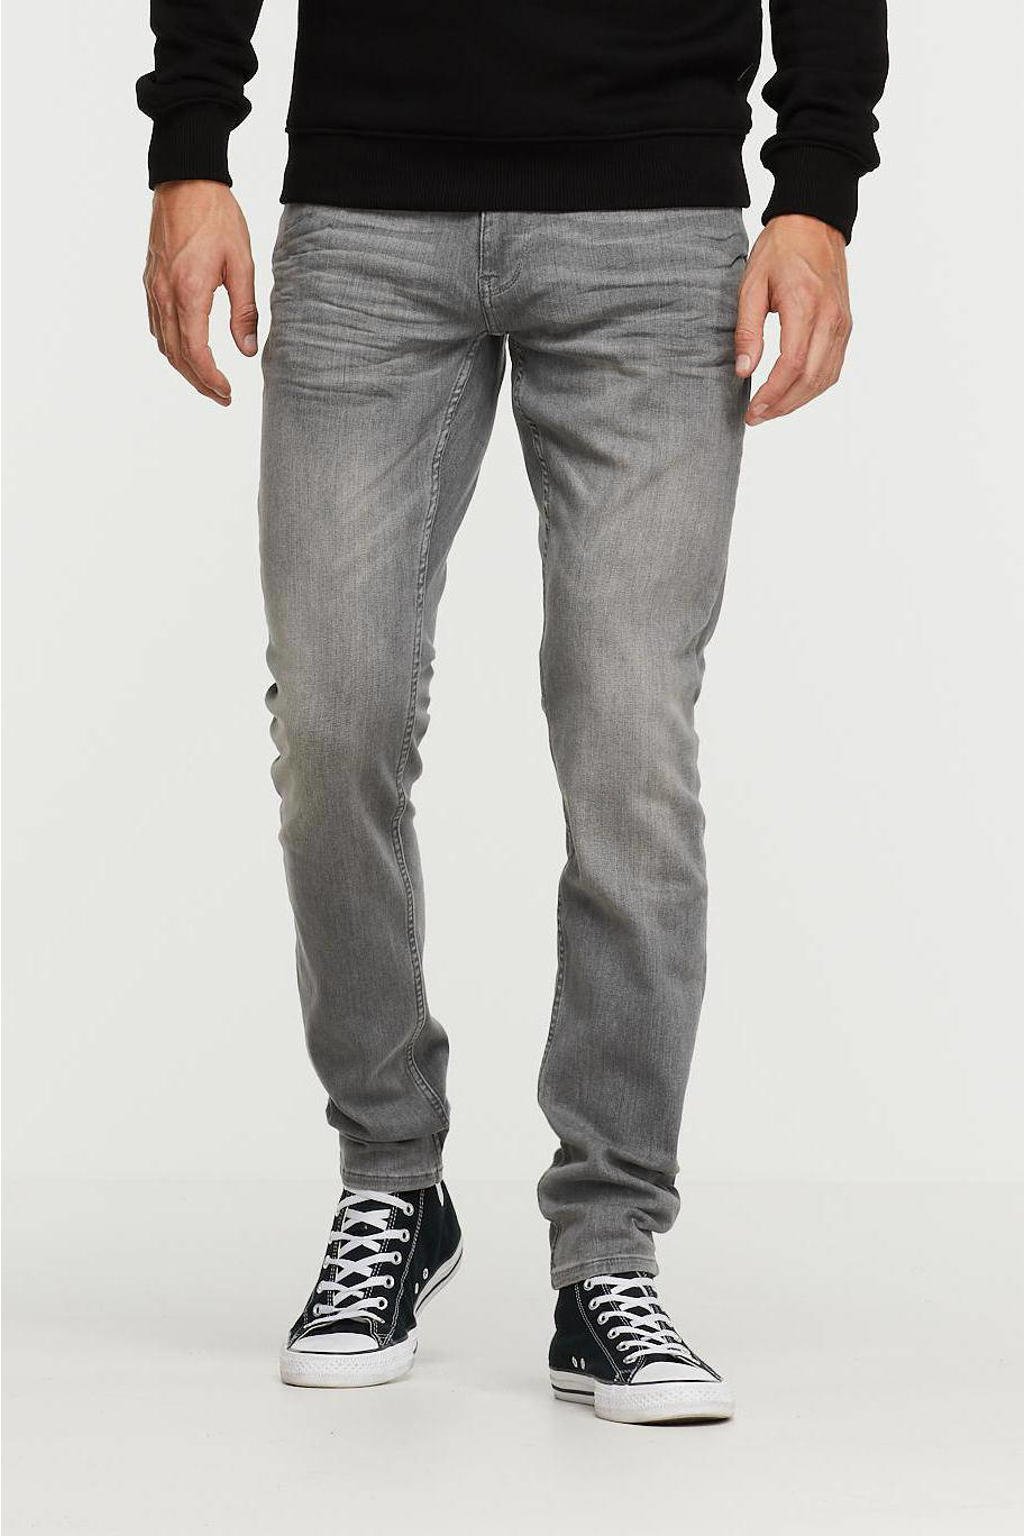 Purewhite skinny jeans The Jone W0105 denim light grey